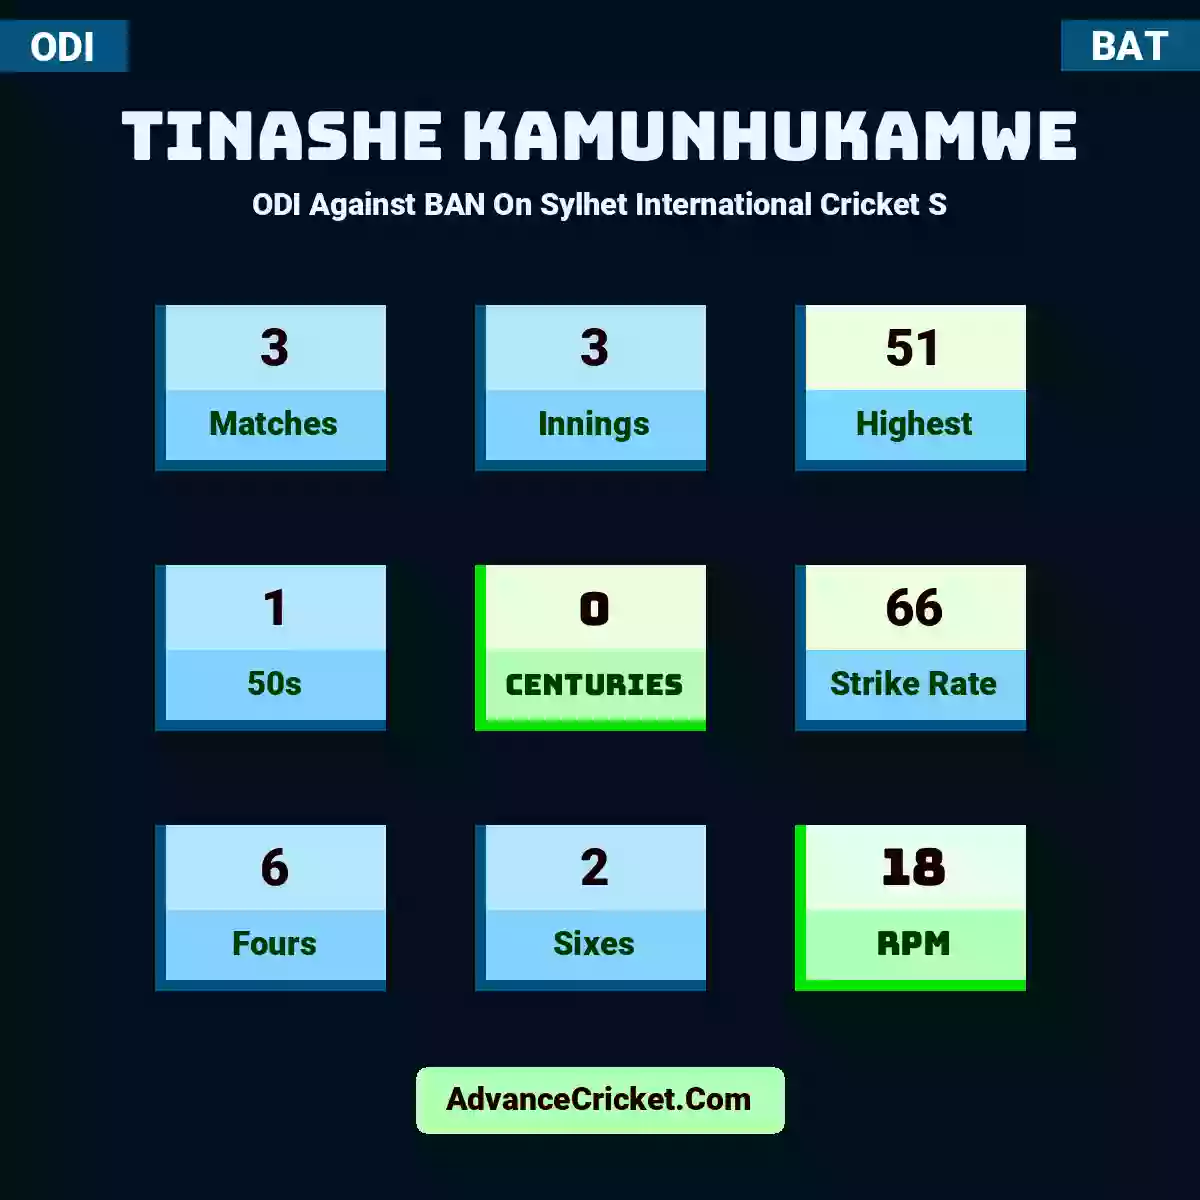 Tinashe Kamunhukamwe ODI  Against BAN On Sylhet International Cricket S, Tinashe Kamunhukamwe played 3 matches, scored 51 runs as highest, 1 half-centuries, and 0 centuries, with a strike rate of 66. T.Kamunhukamwe hit 6 fours and 2 sixes, with an RPM of 18.